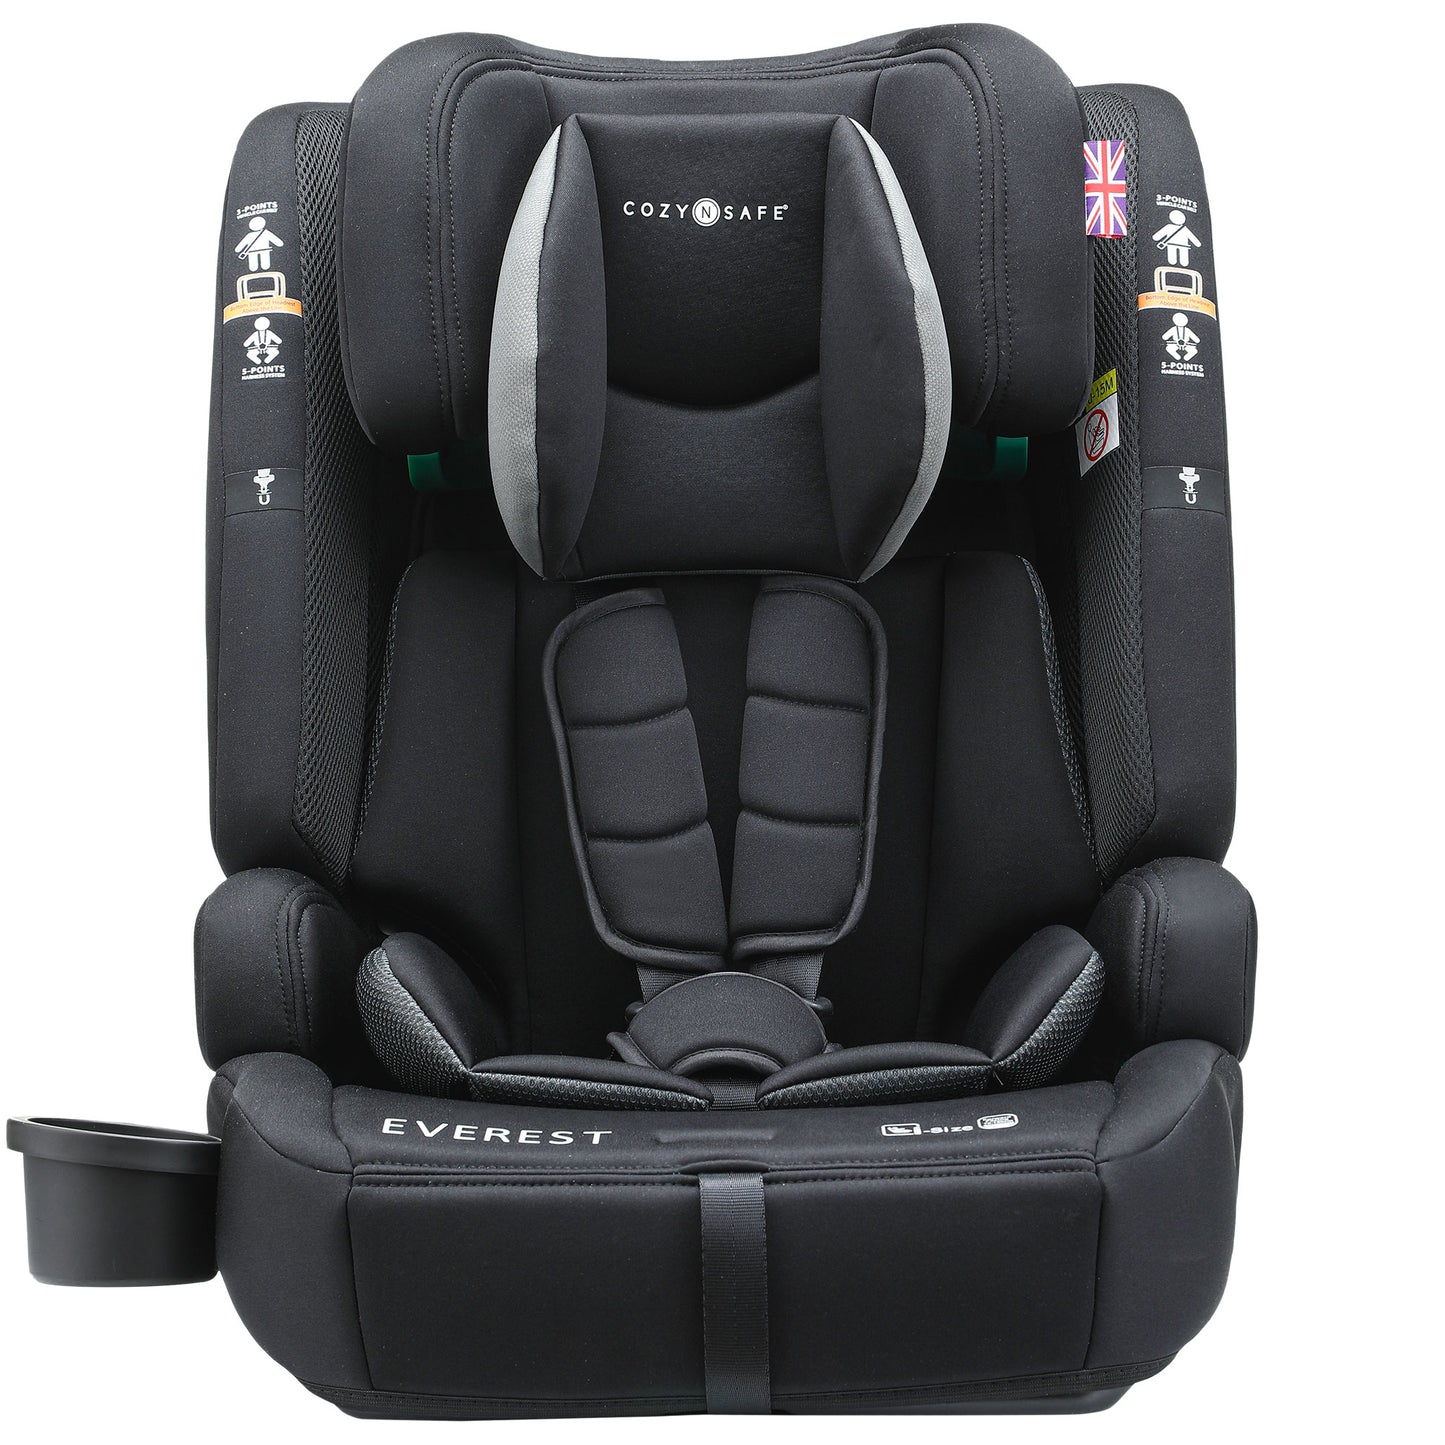 The Cozy N Safe Everest i-Size 76cm-150cm Car Seat